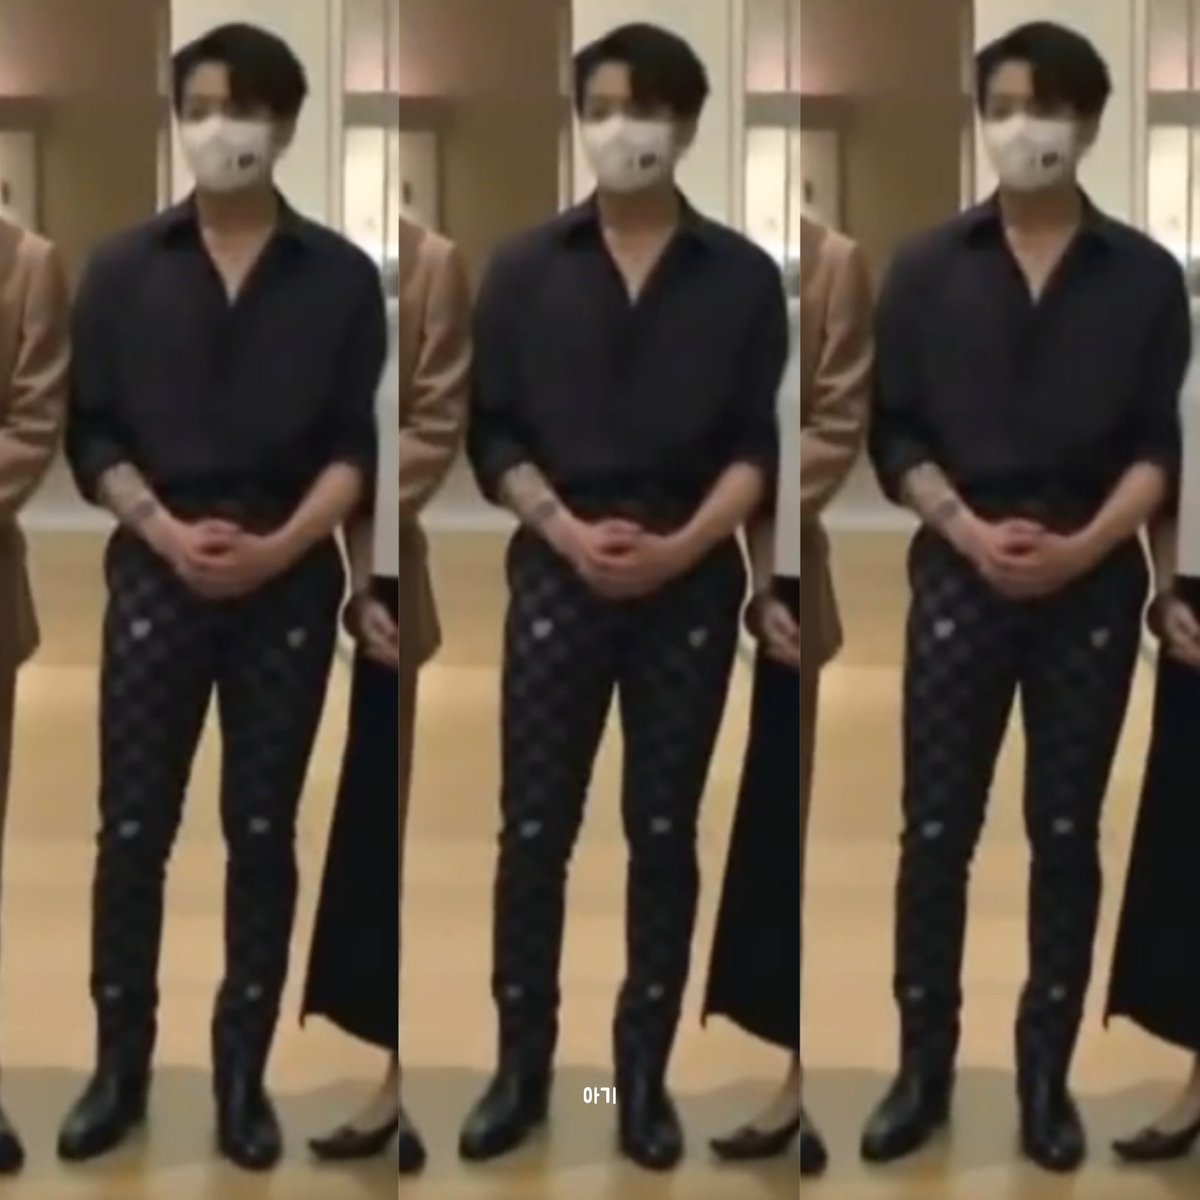 BTS: Jungkook rocks Louis Vuitton's damier cigarette pants like